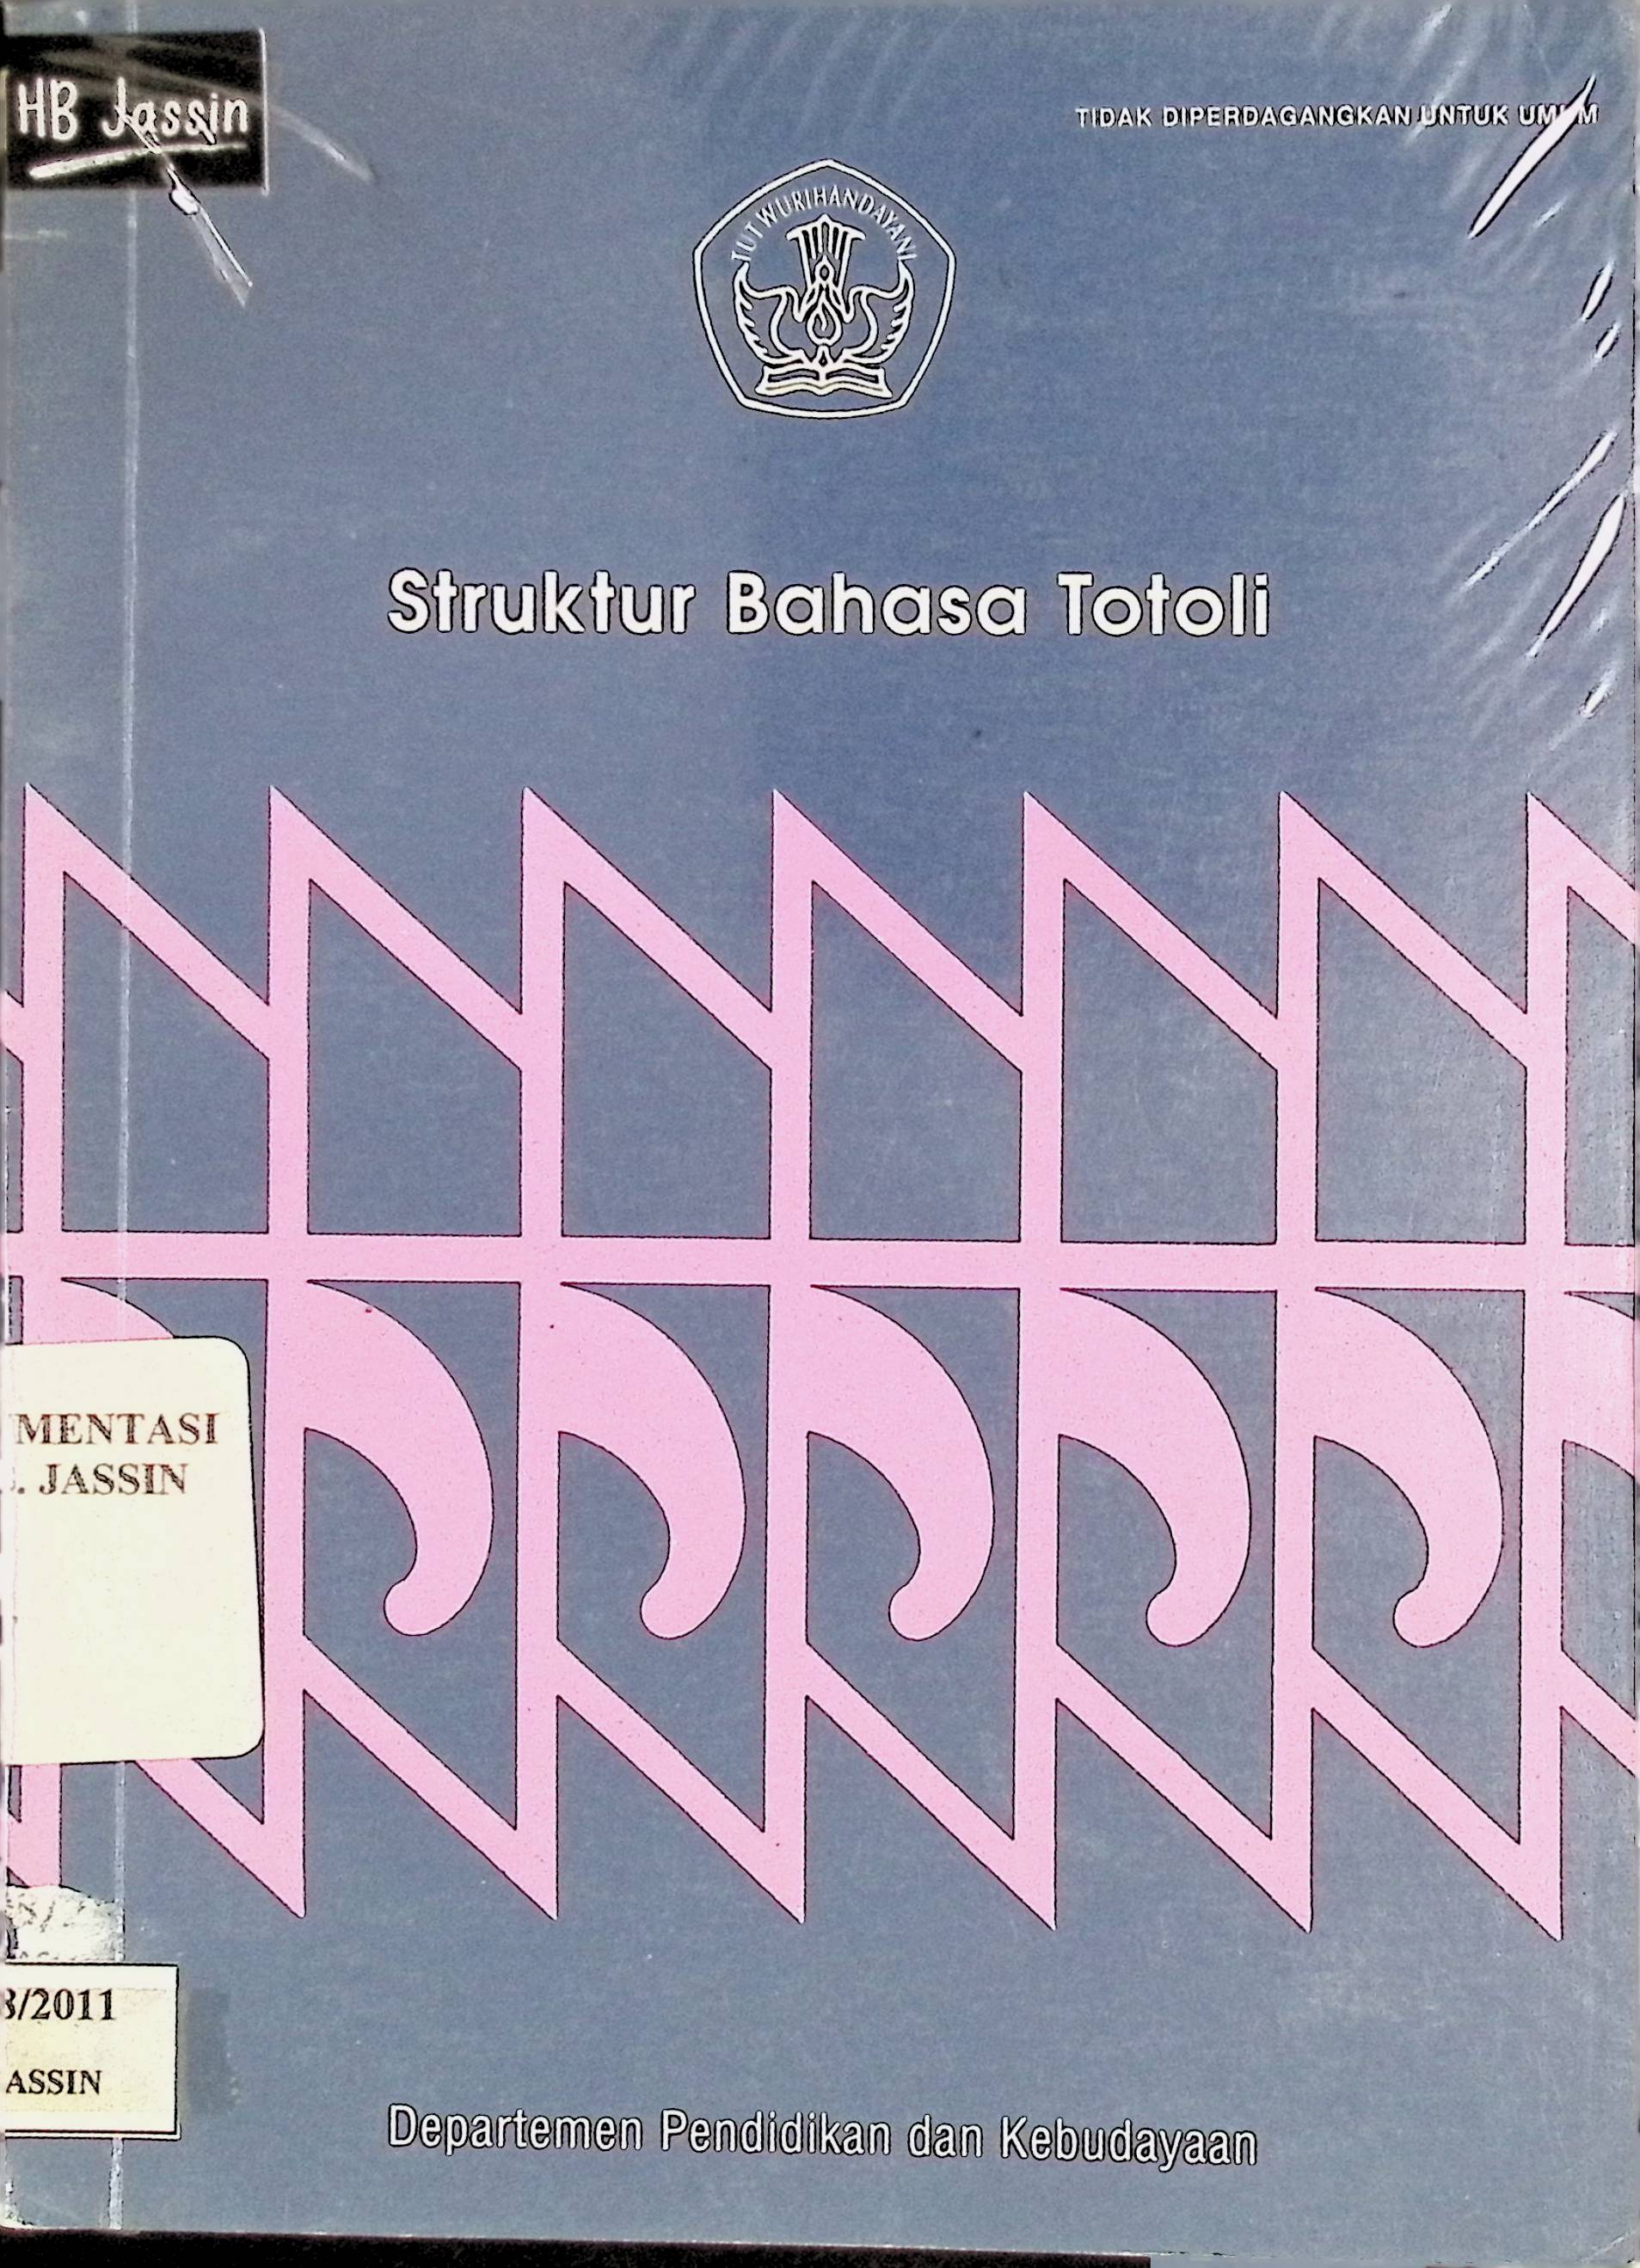 Struktur bahasa Totoli